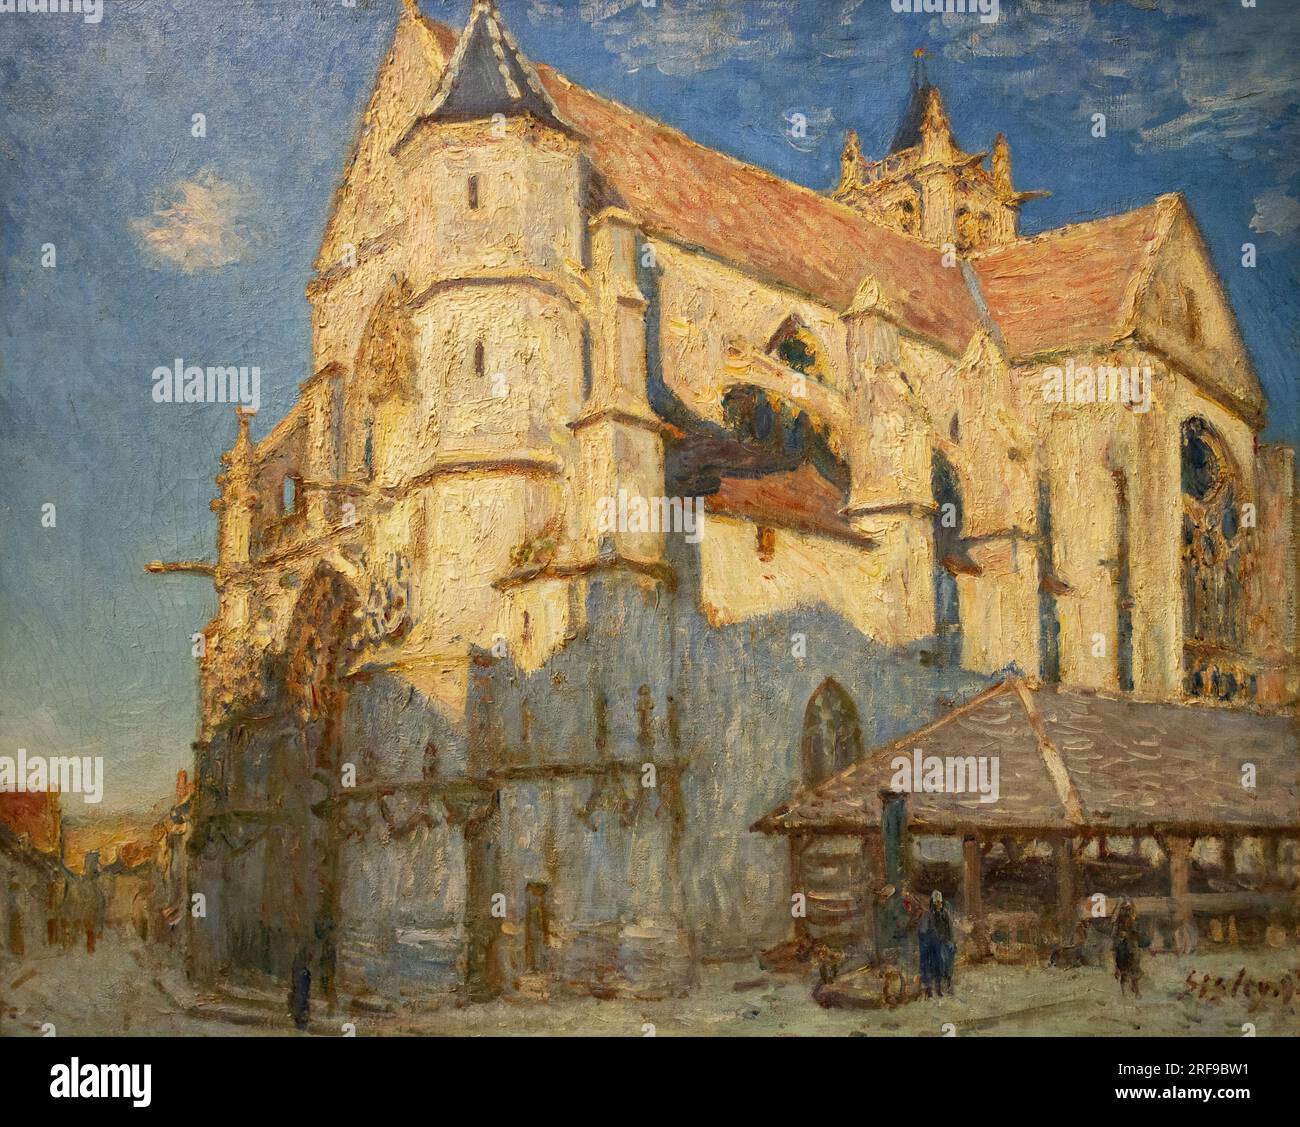 Alfred Sisley Gemälde, L’eglise de Moret, temps de gelee, (Moret Kirche frostiges Wetter); 1893; impressionistischer Maler aus dem 19. Jahrhundert, der in Frankreich lebt. Stockfoto